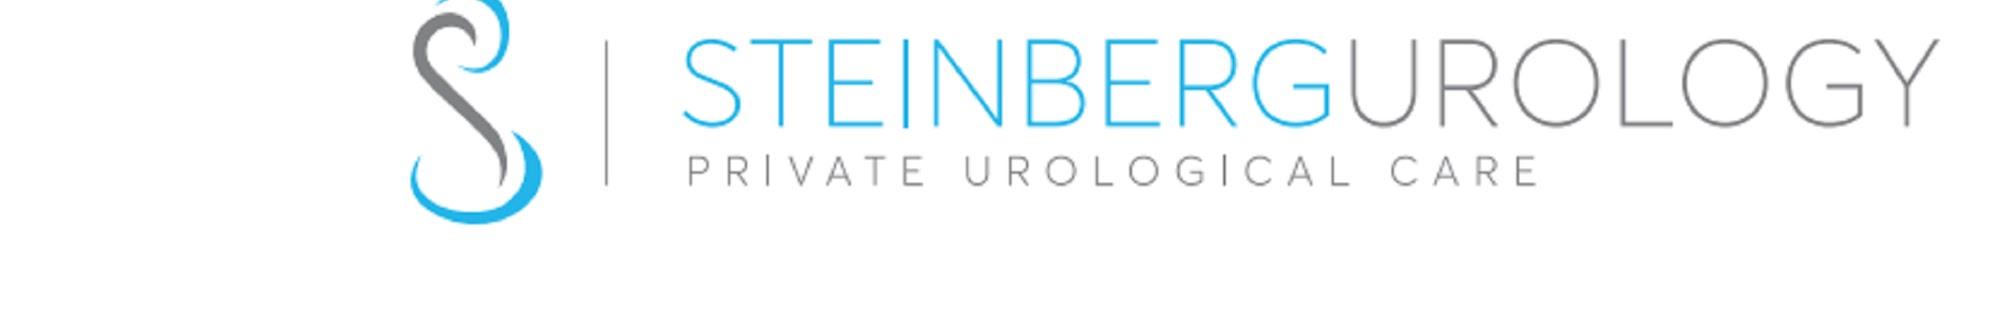 Steinberg Urology